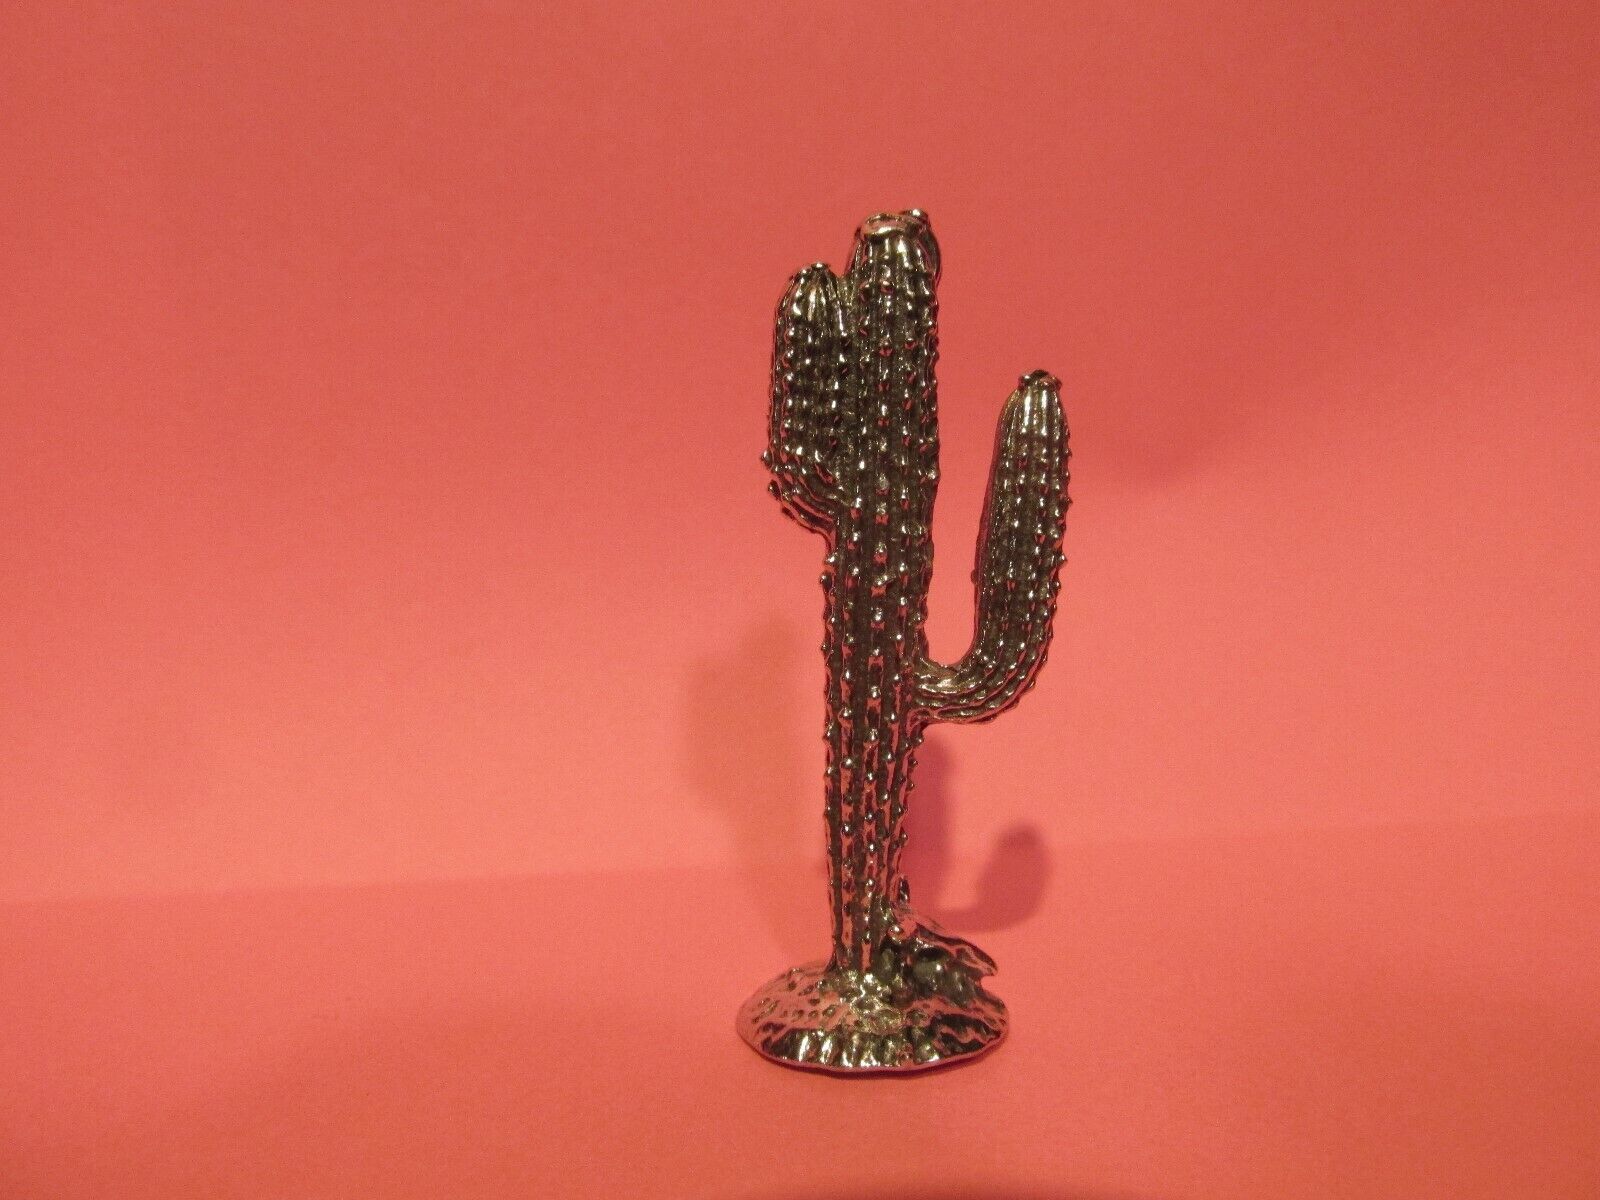  Pewter Saguaro Cactus Desert Plant Figurine 2 inches tall nice detail